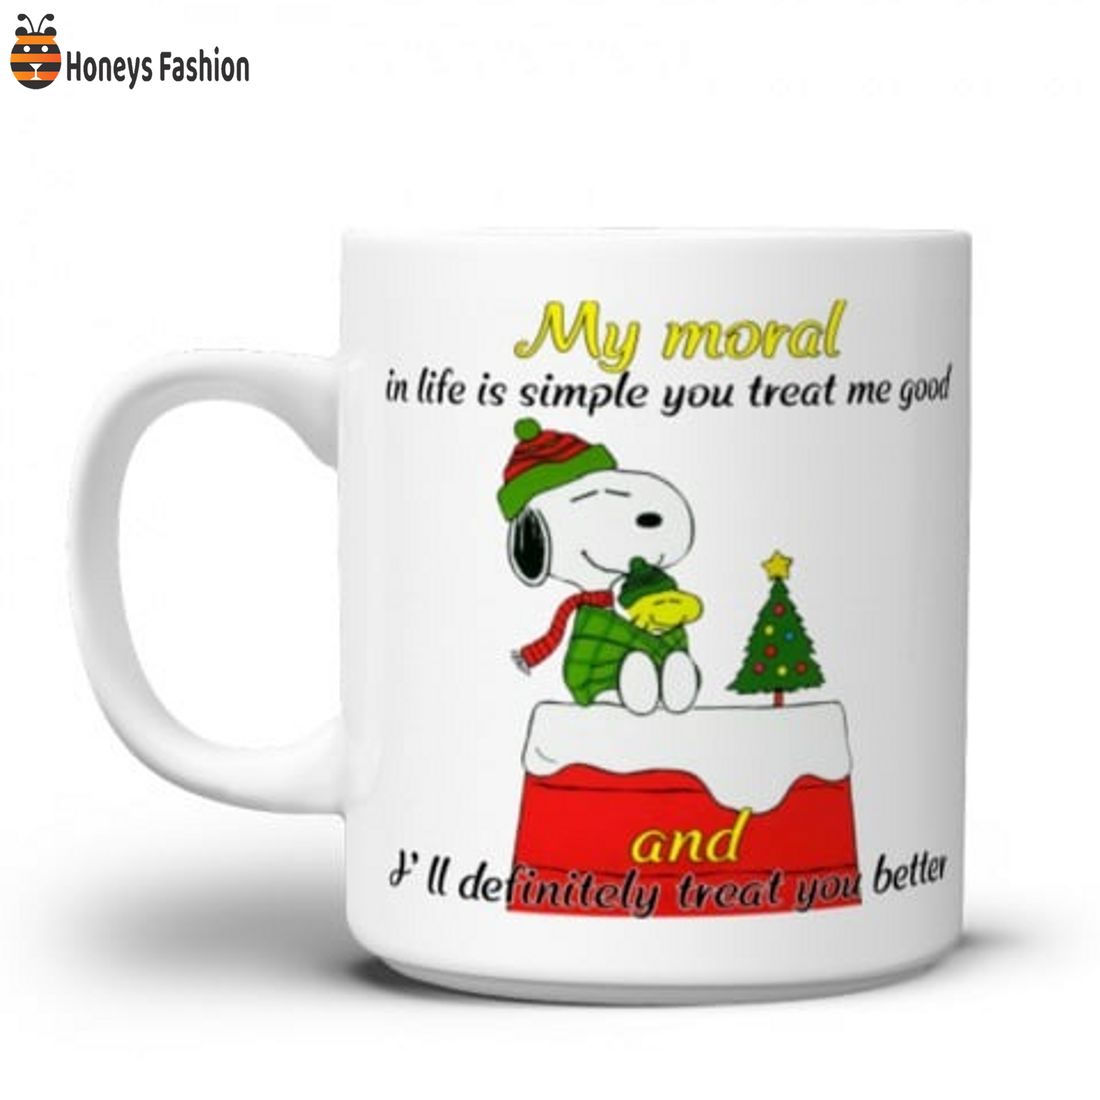 Snoopy my moral in life is simple toy treat me goog mug